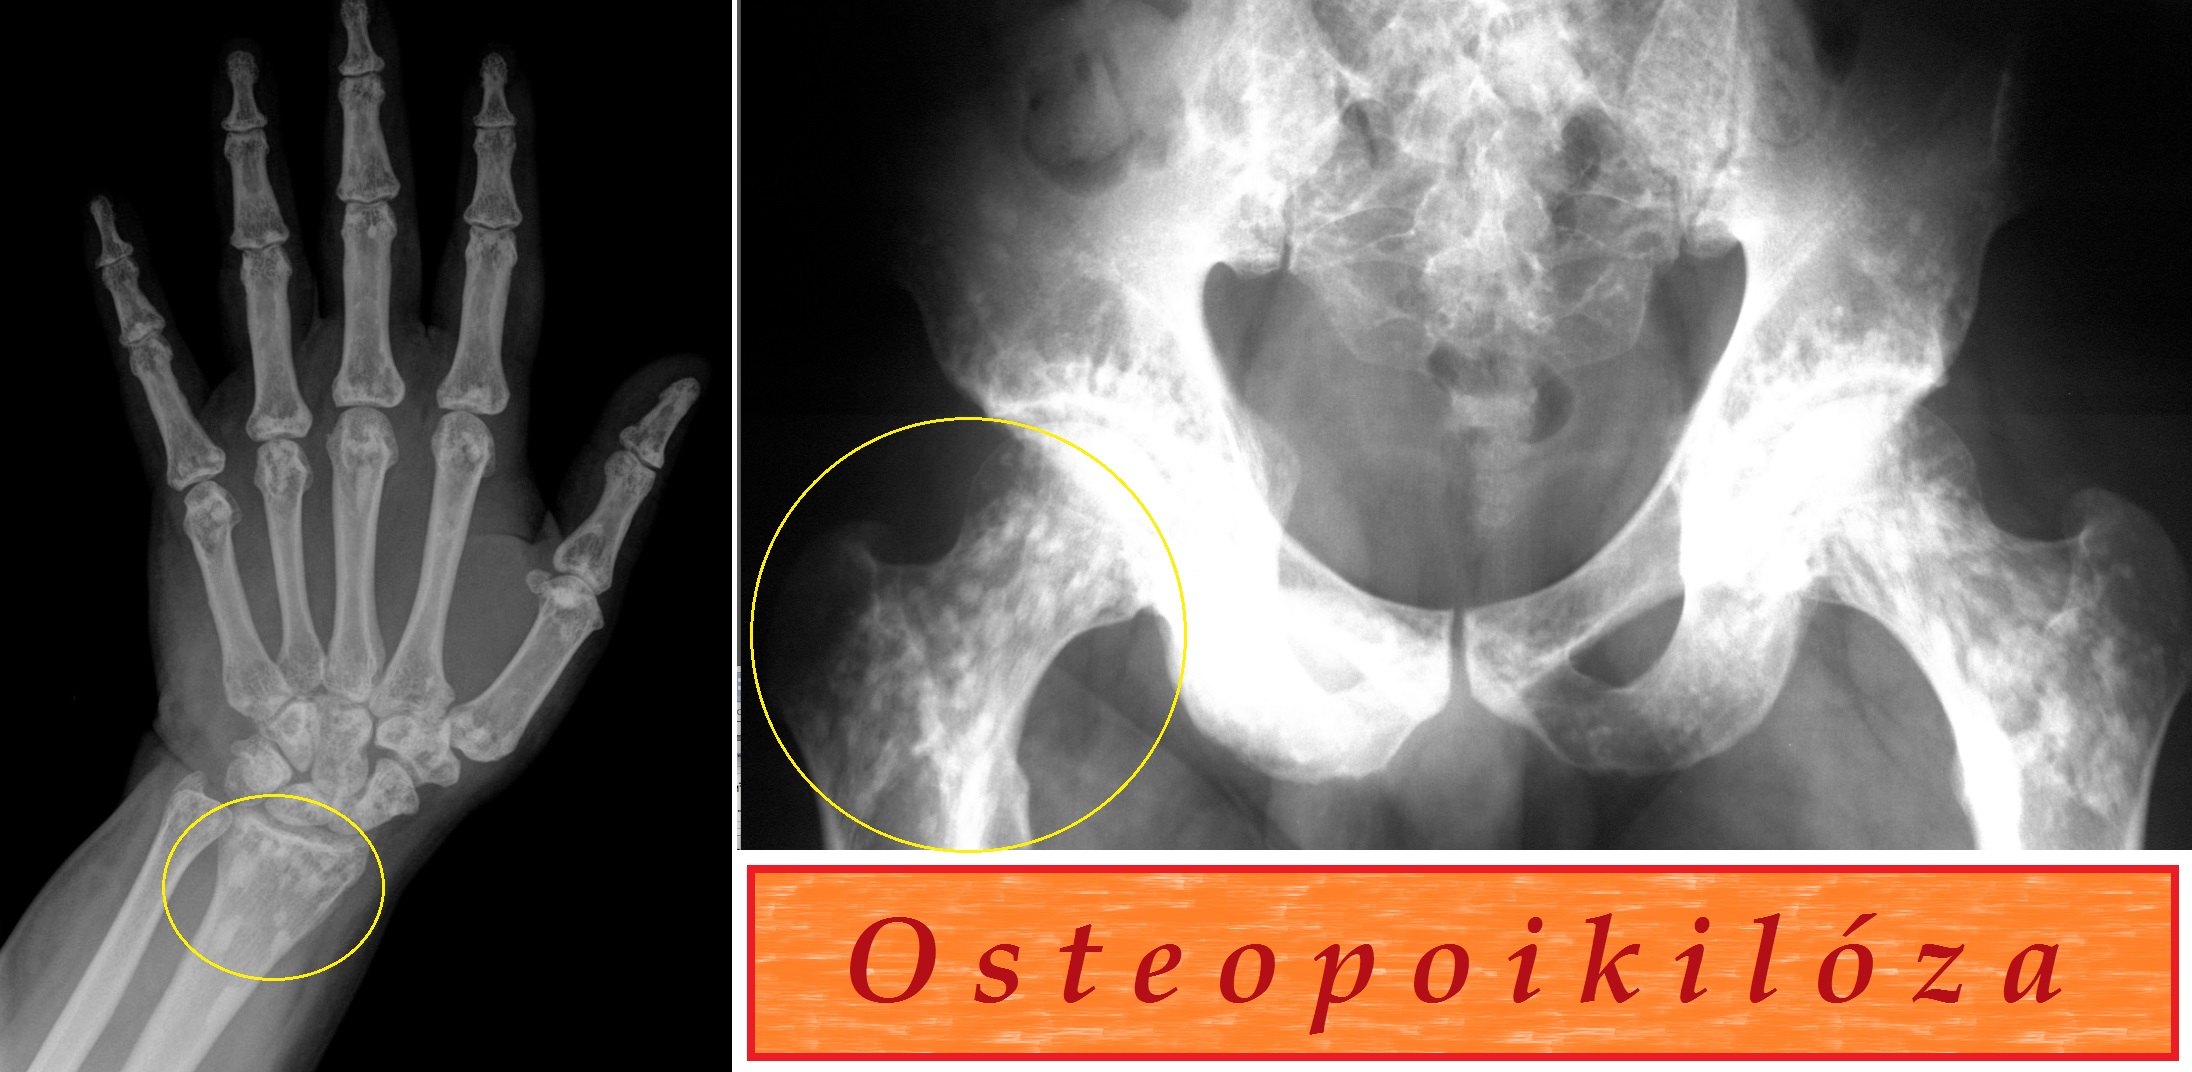 osteopoikilosa-priznaky-projevy-symptomy